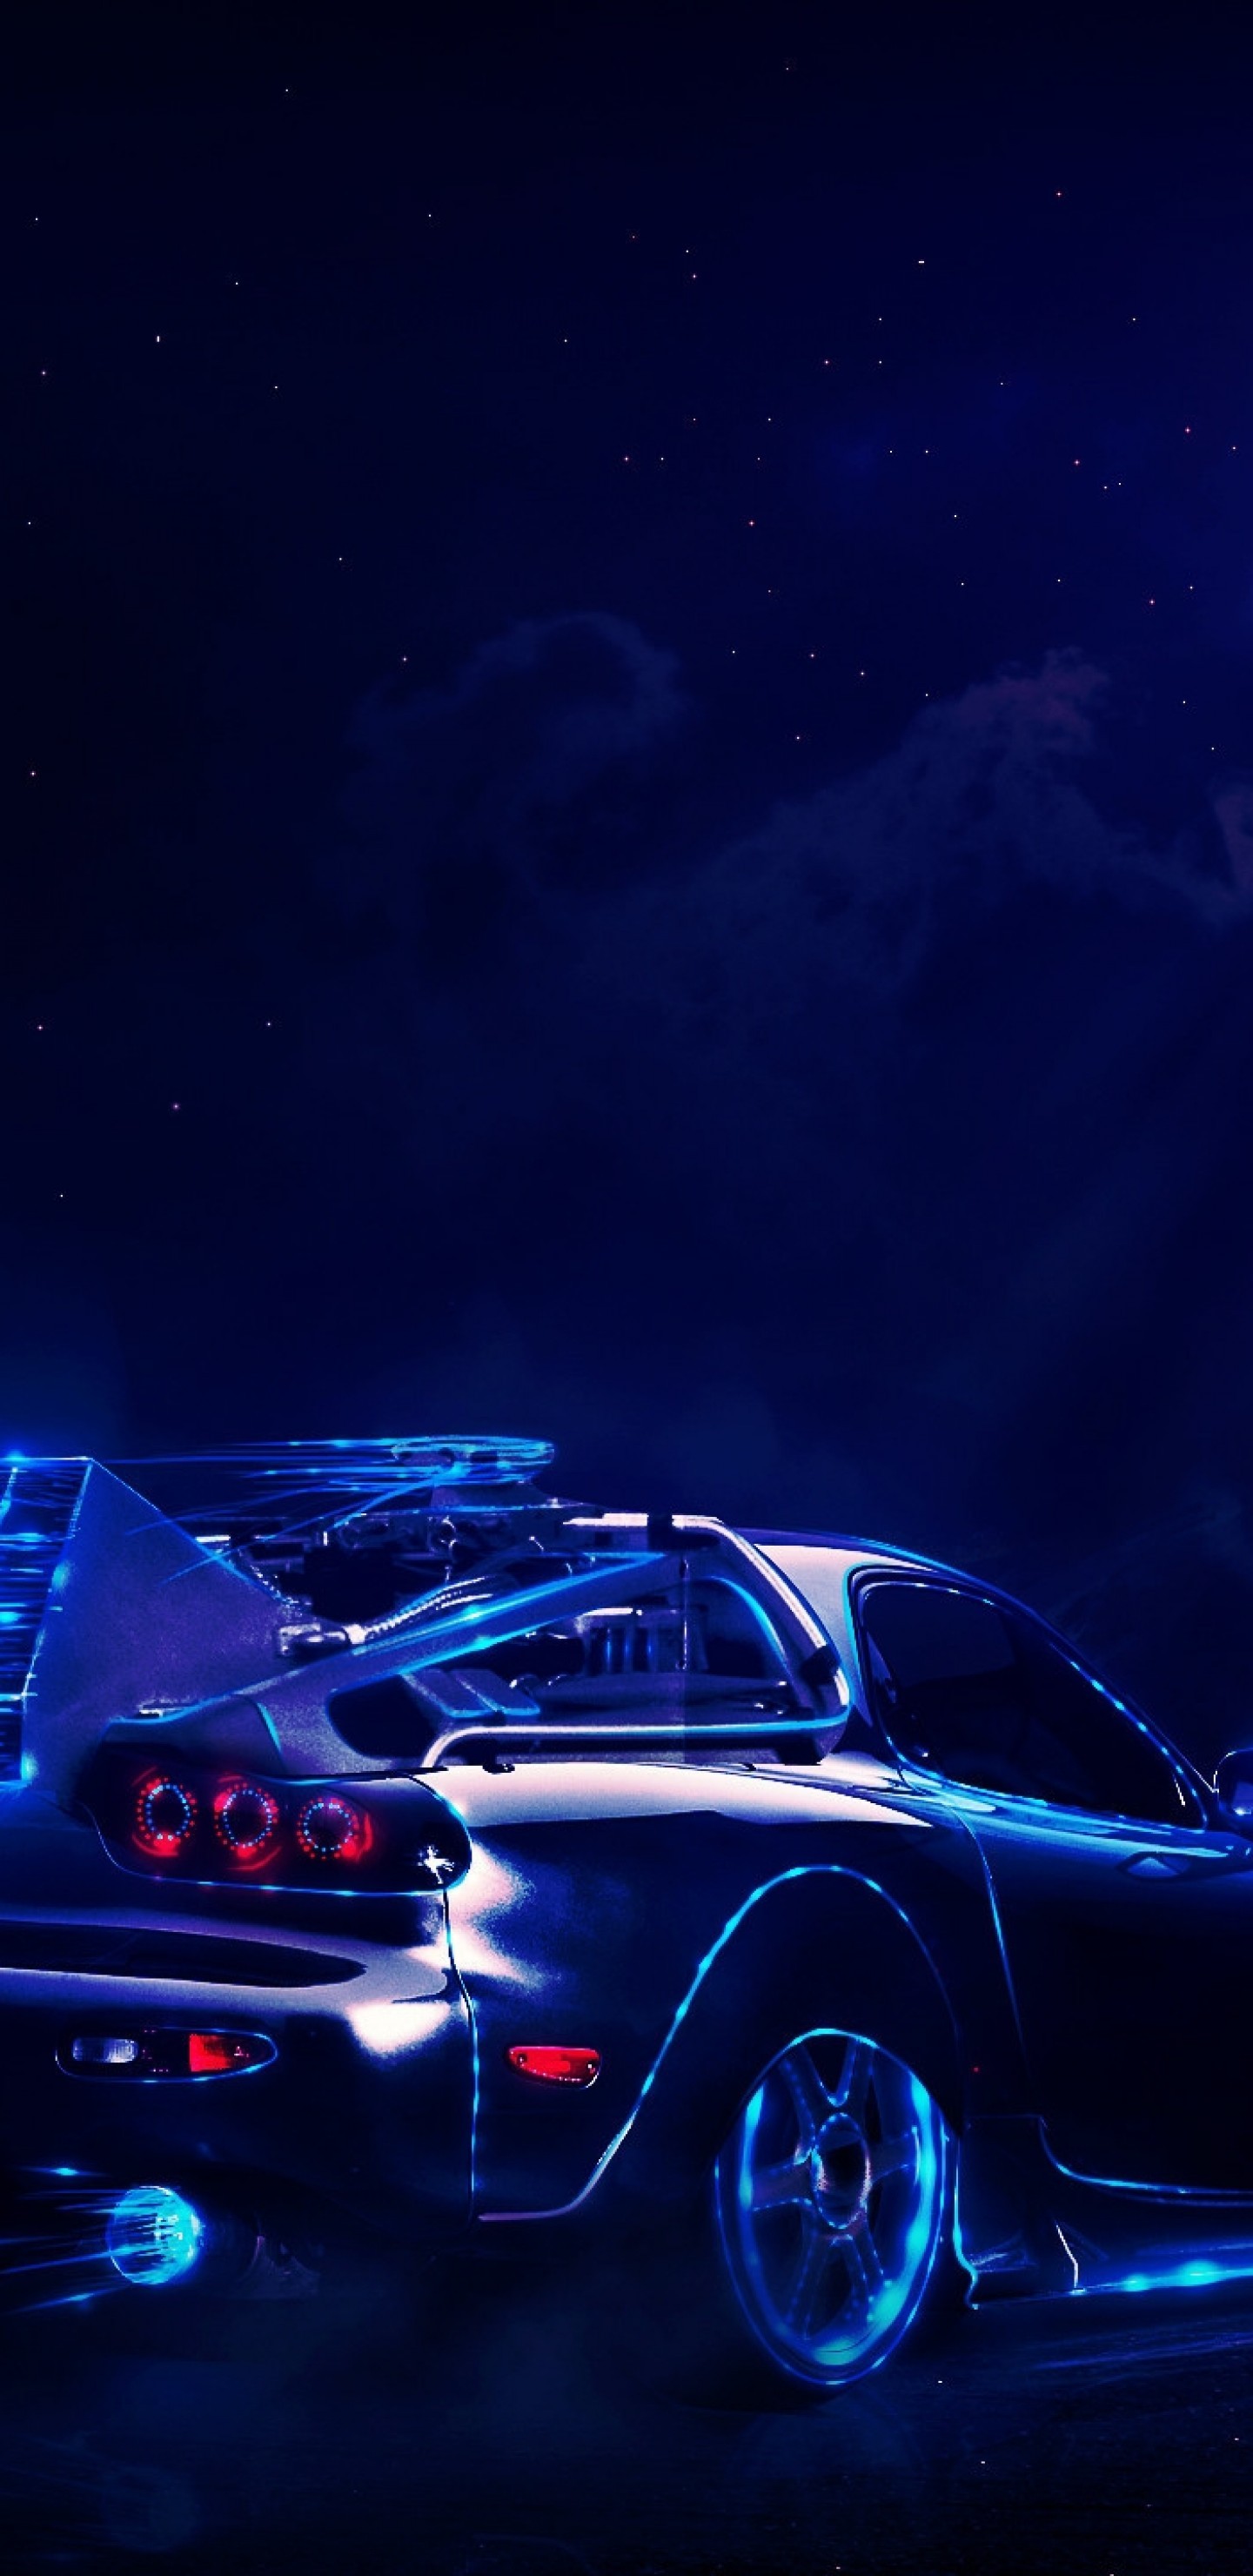 Back To The Future, Mazda Rx7, Moon, Digital Art - 4k Wallpaper Synthwave Car - HD Wallpaper 